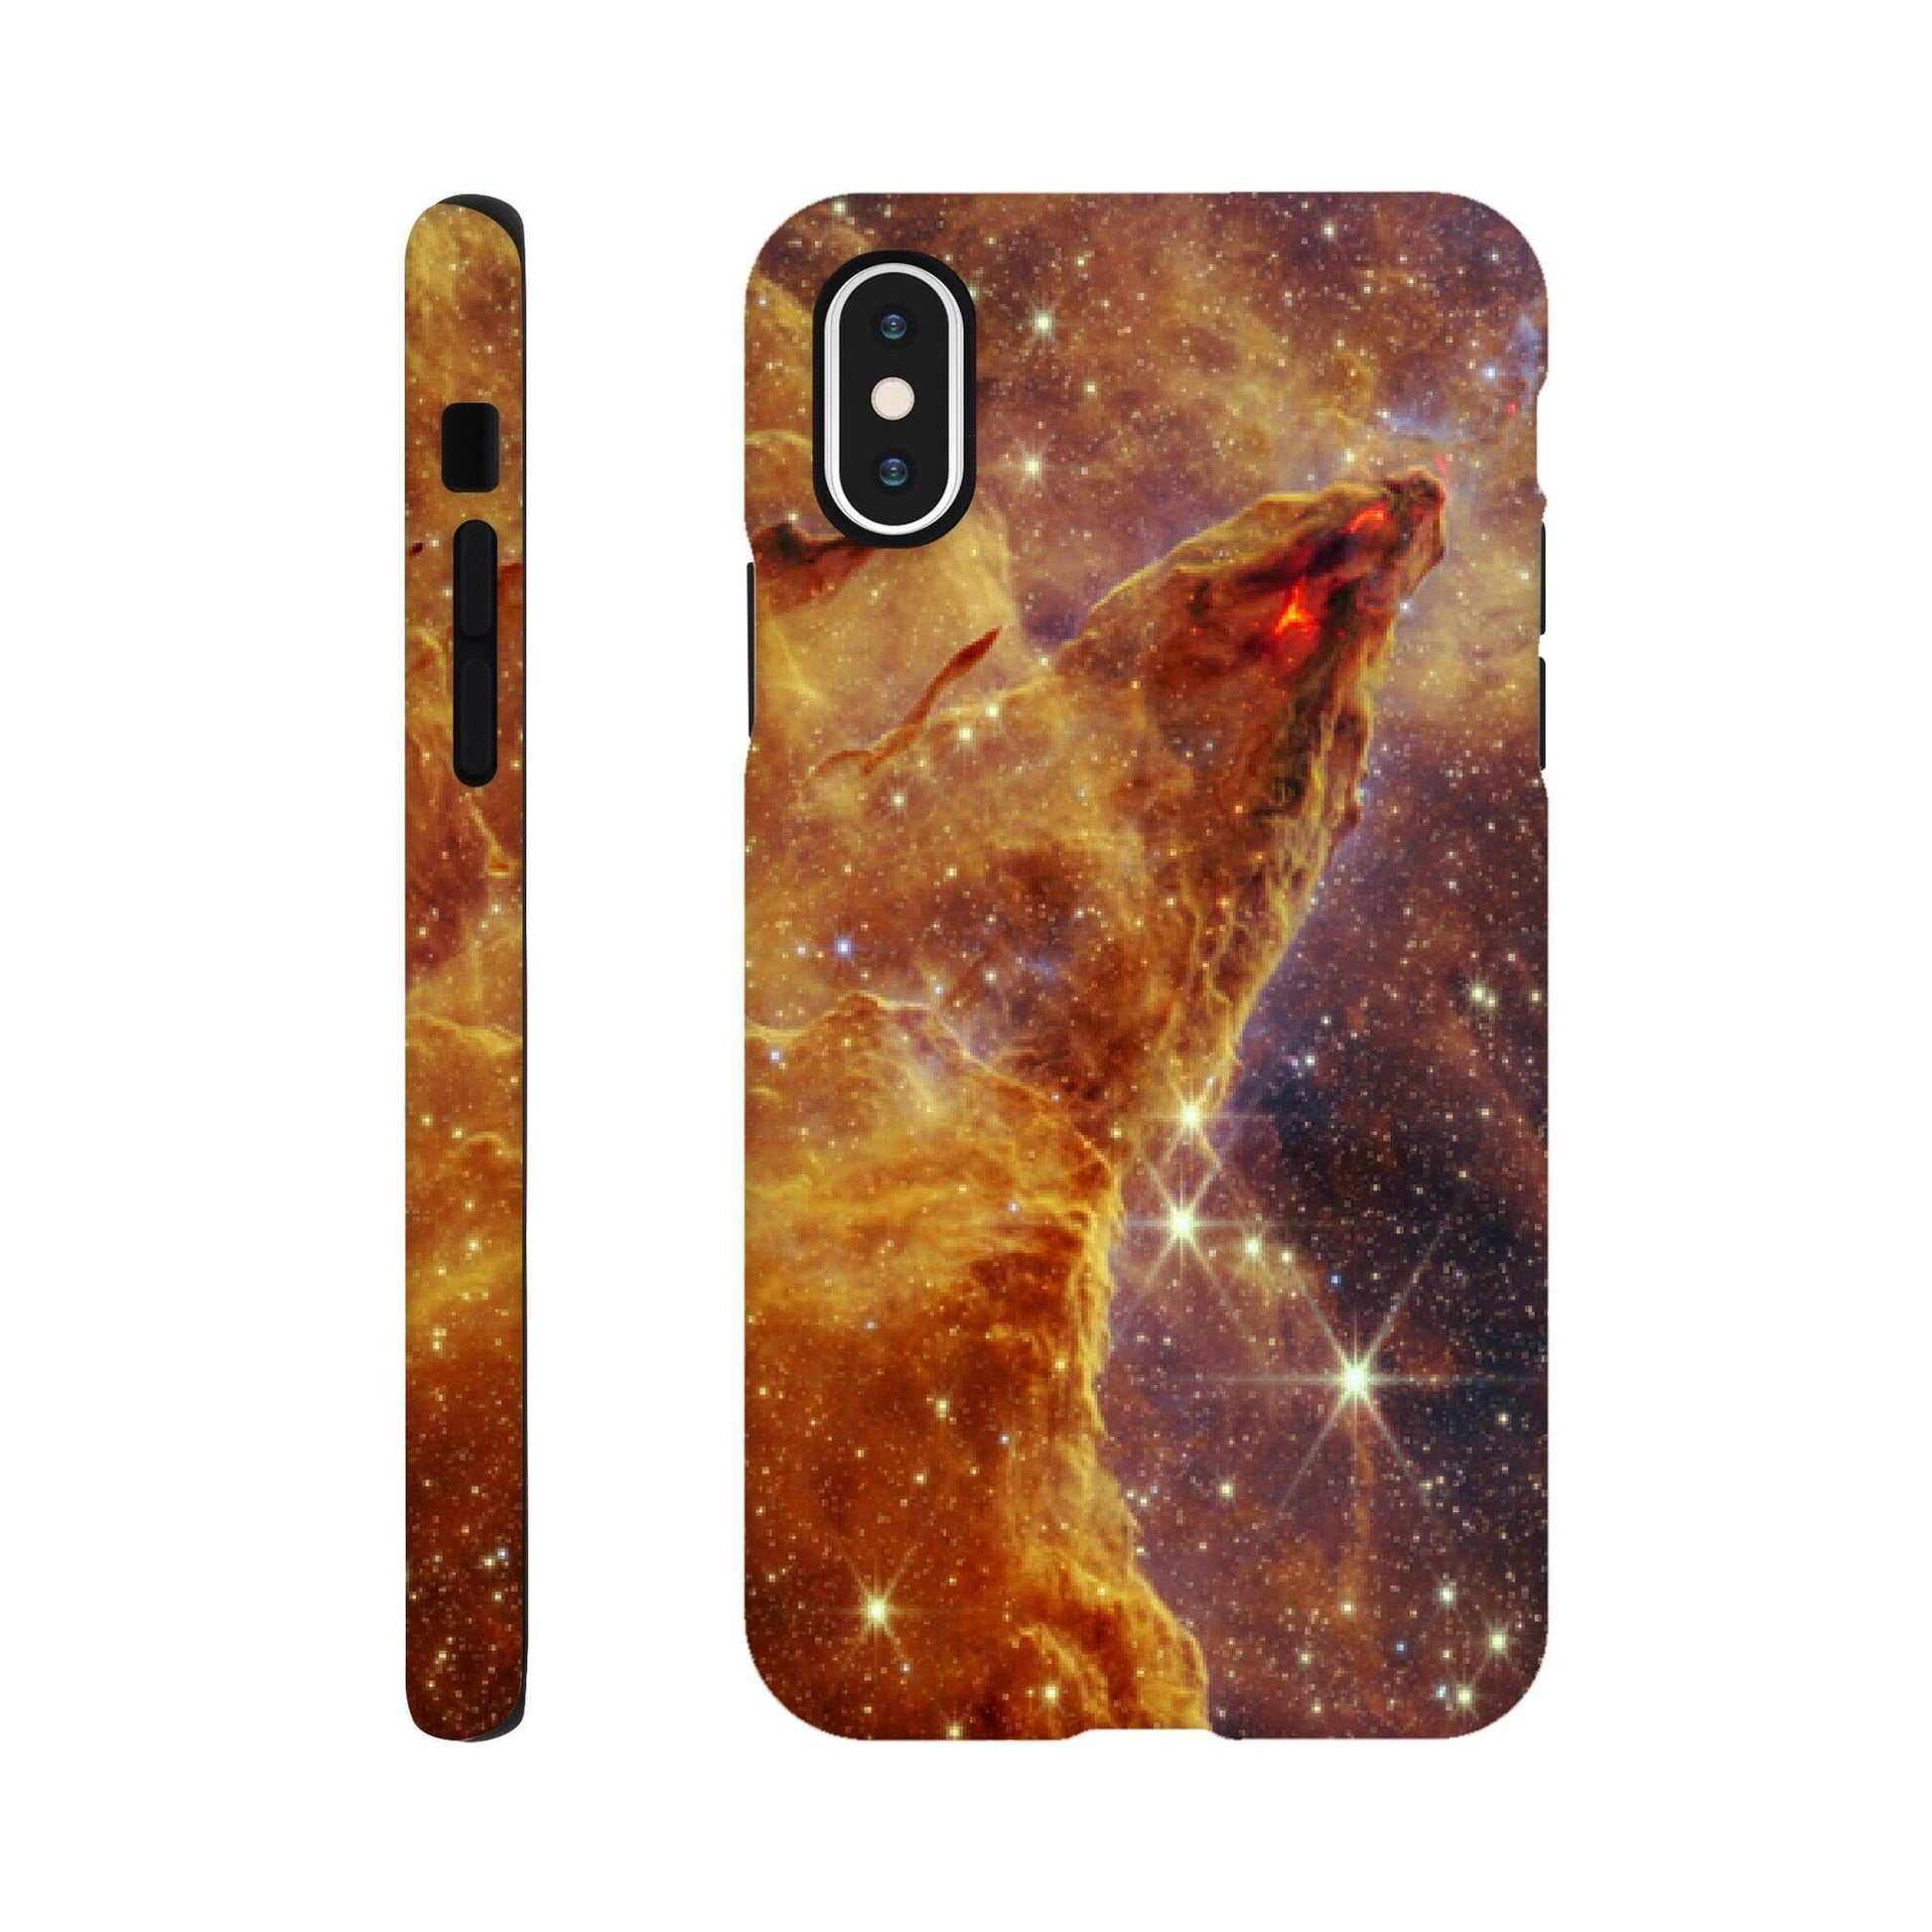 NASA - Phone Case Tough - 9. Pillars of Creation (NIRCam Image) - James Webb Space Telescope Phone Case TP Aviation Art iPhone XS 